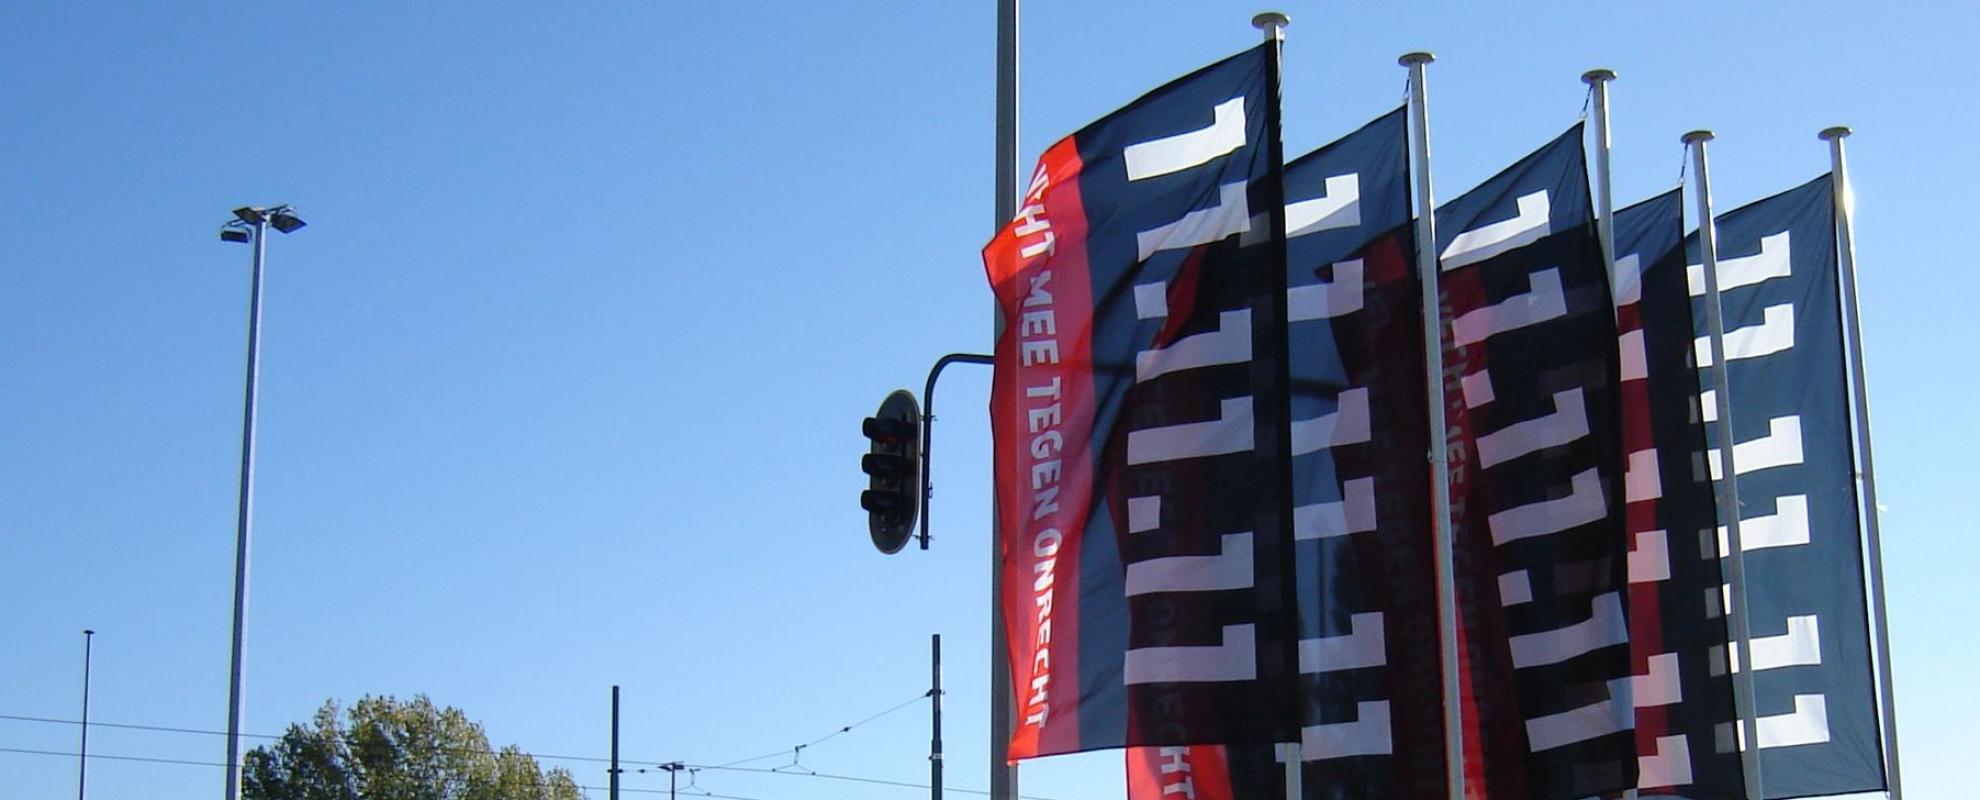 11.11.11 vlaggen in Antwerpen